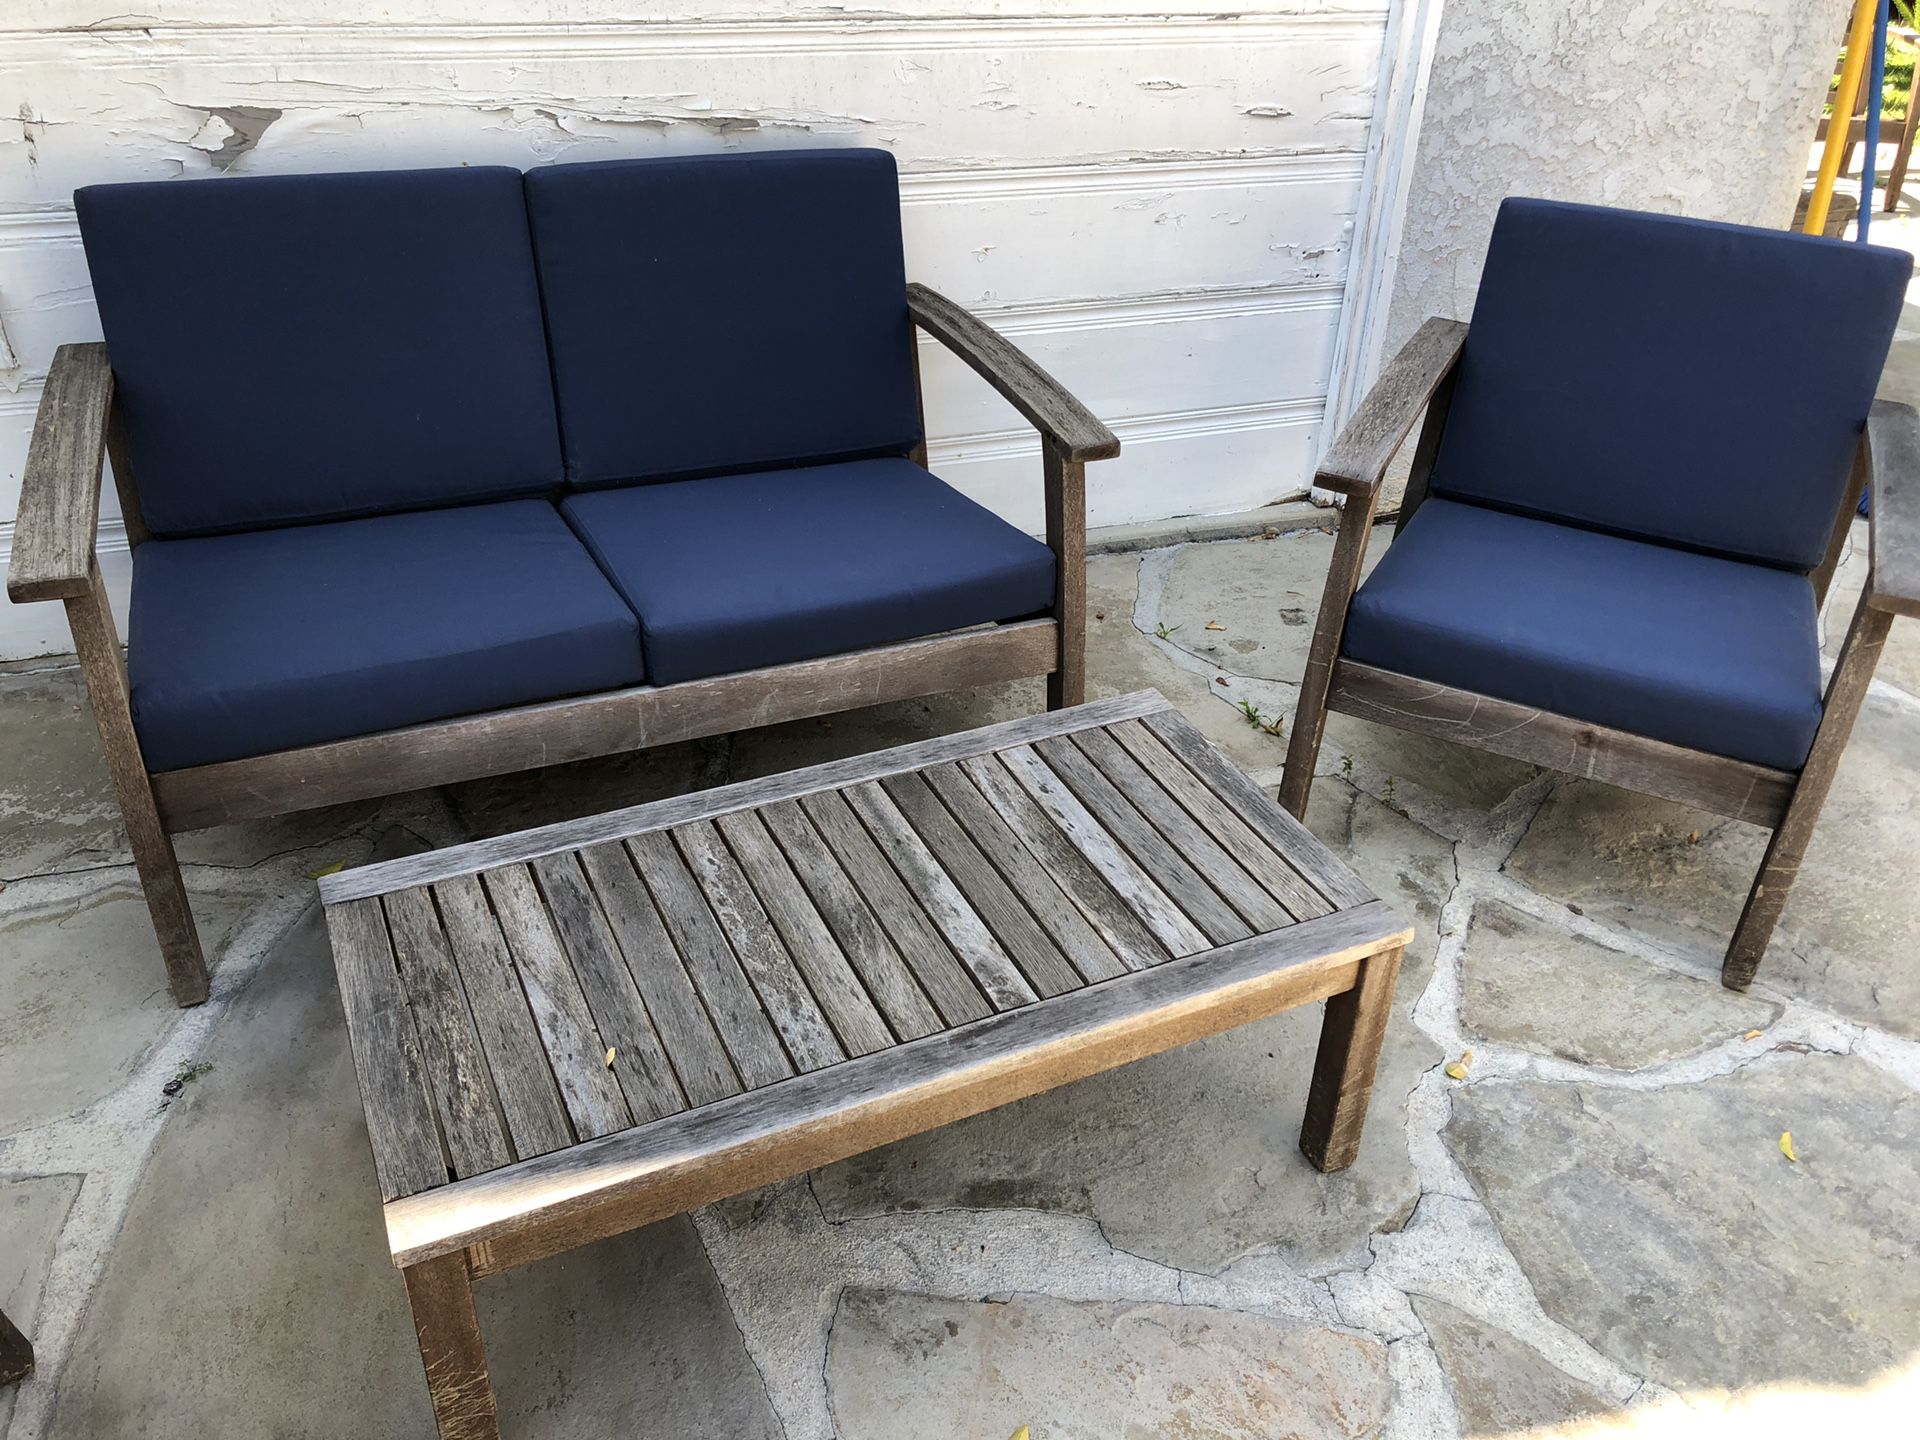 Pottery barn teak patio furniture set with matching cushions and cushion storage bin